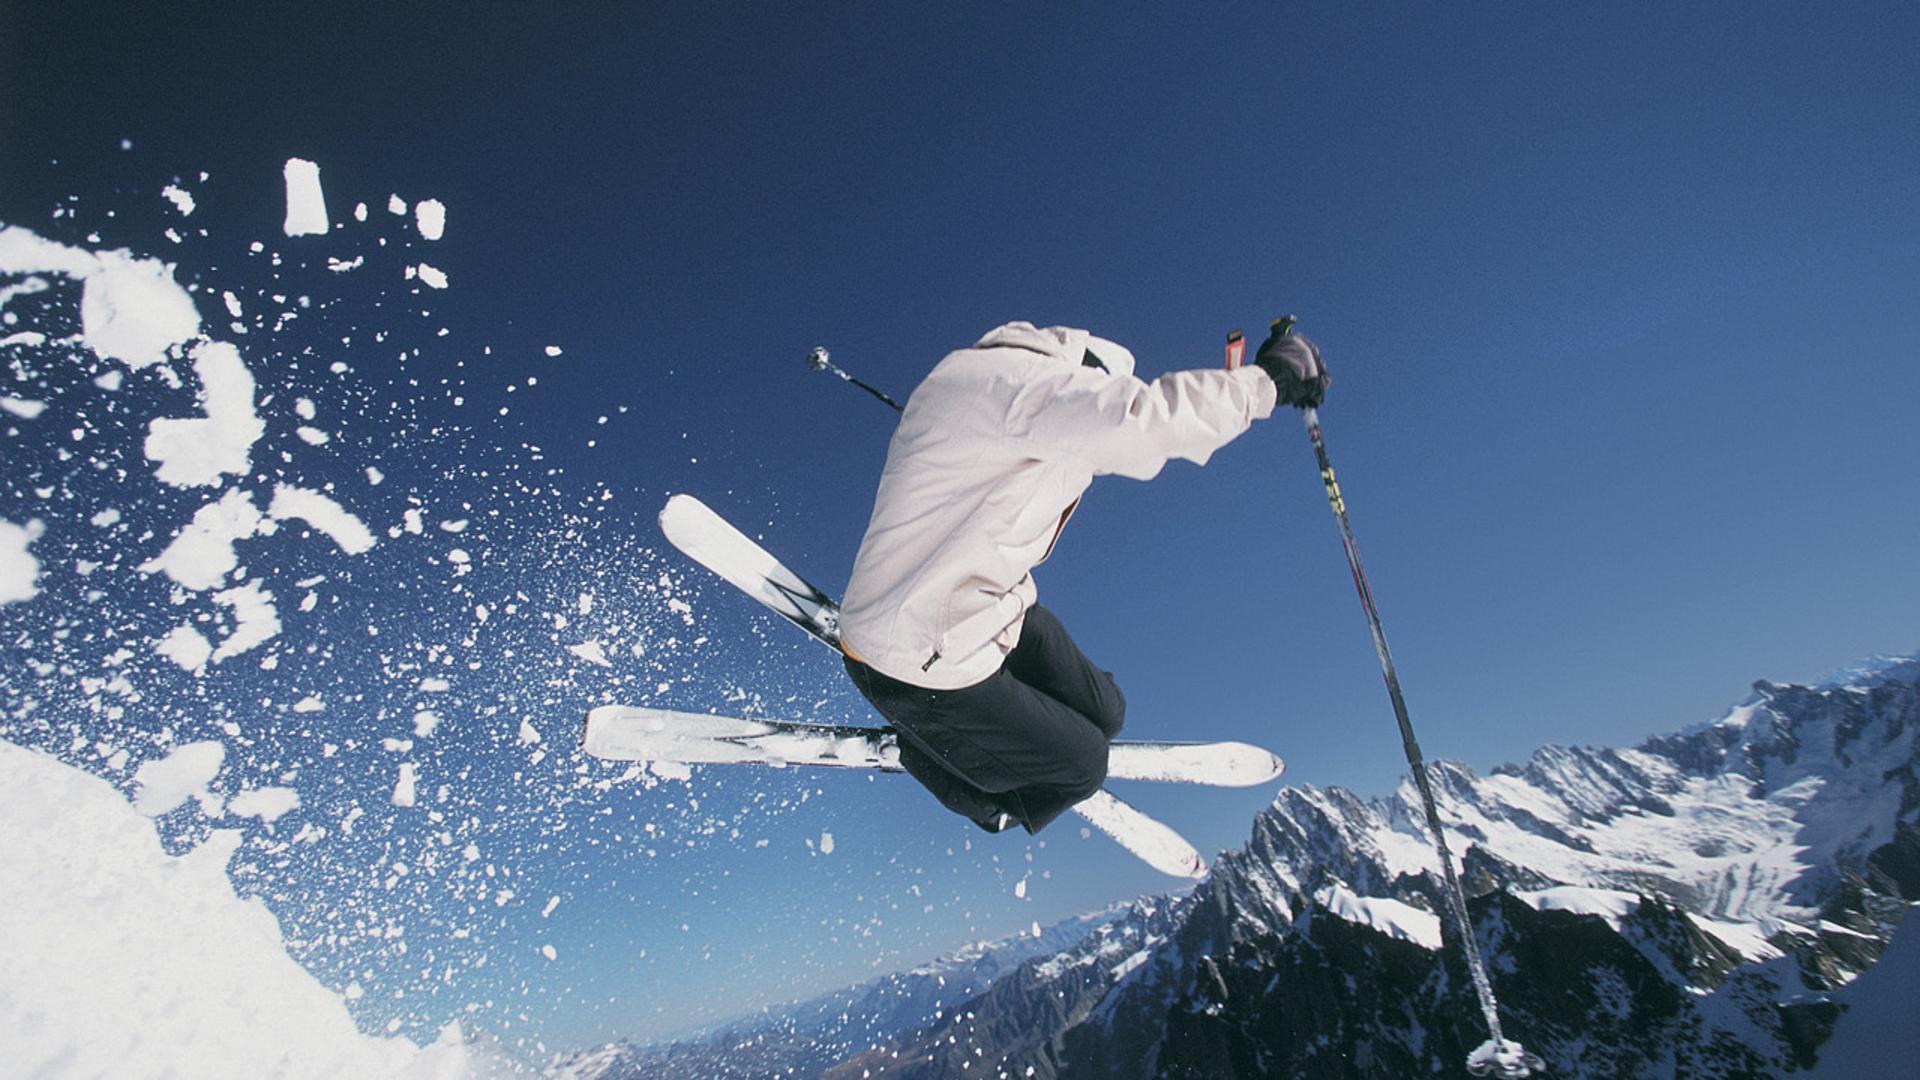 Ski Live Wallpaper For Android Apk